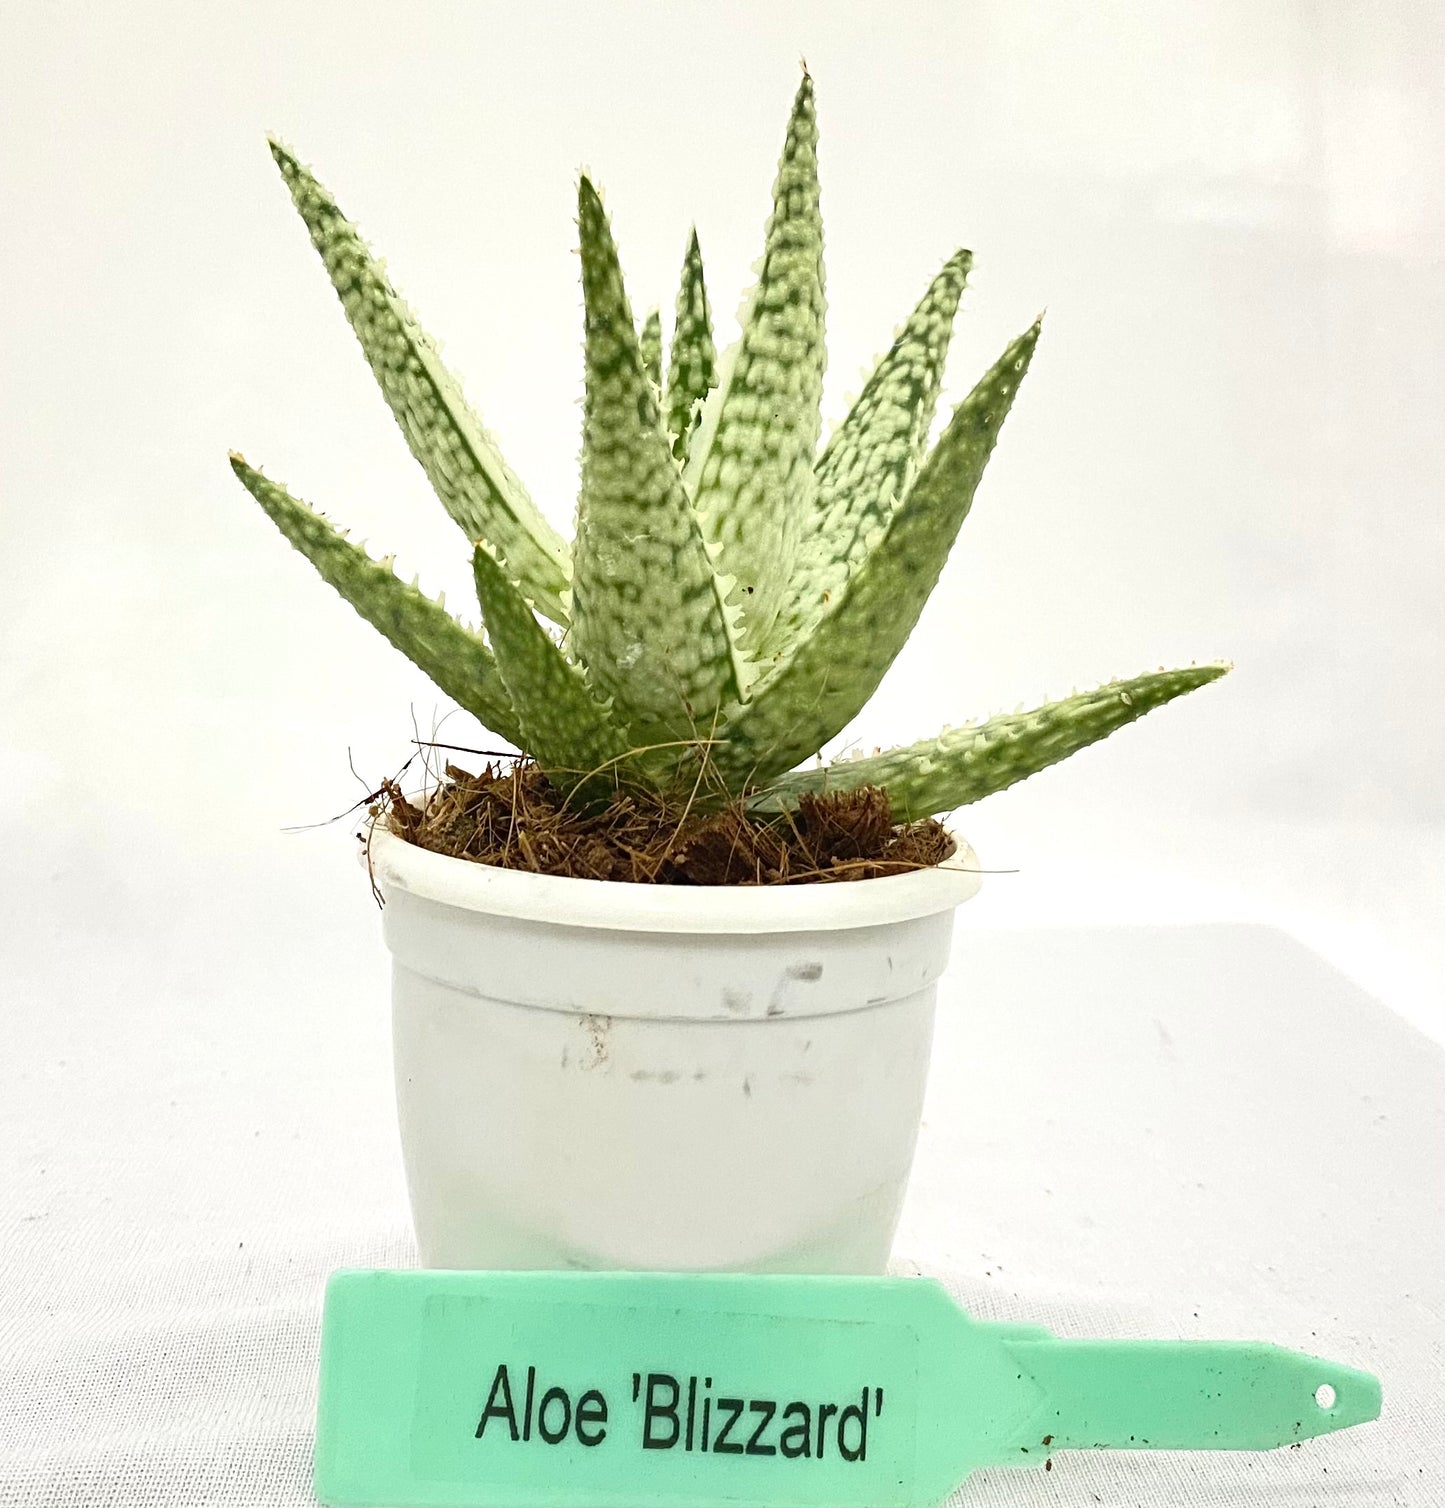 Aloe Blizzard